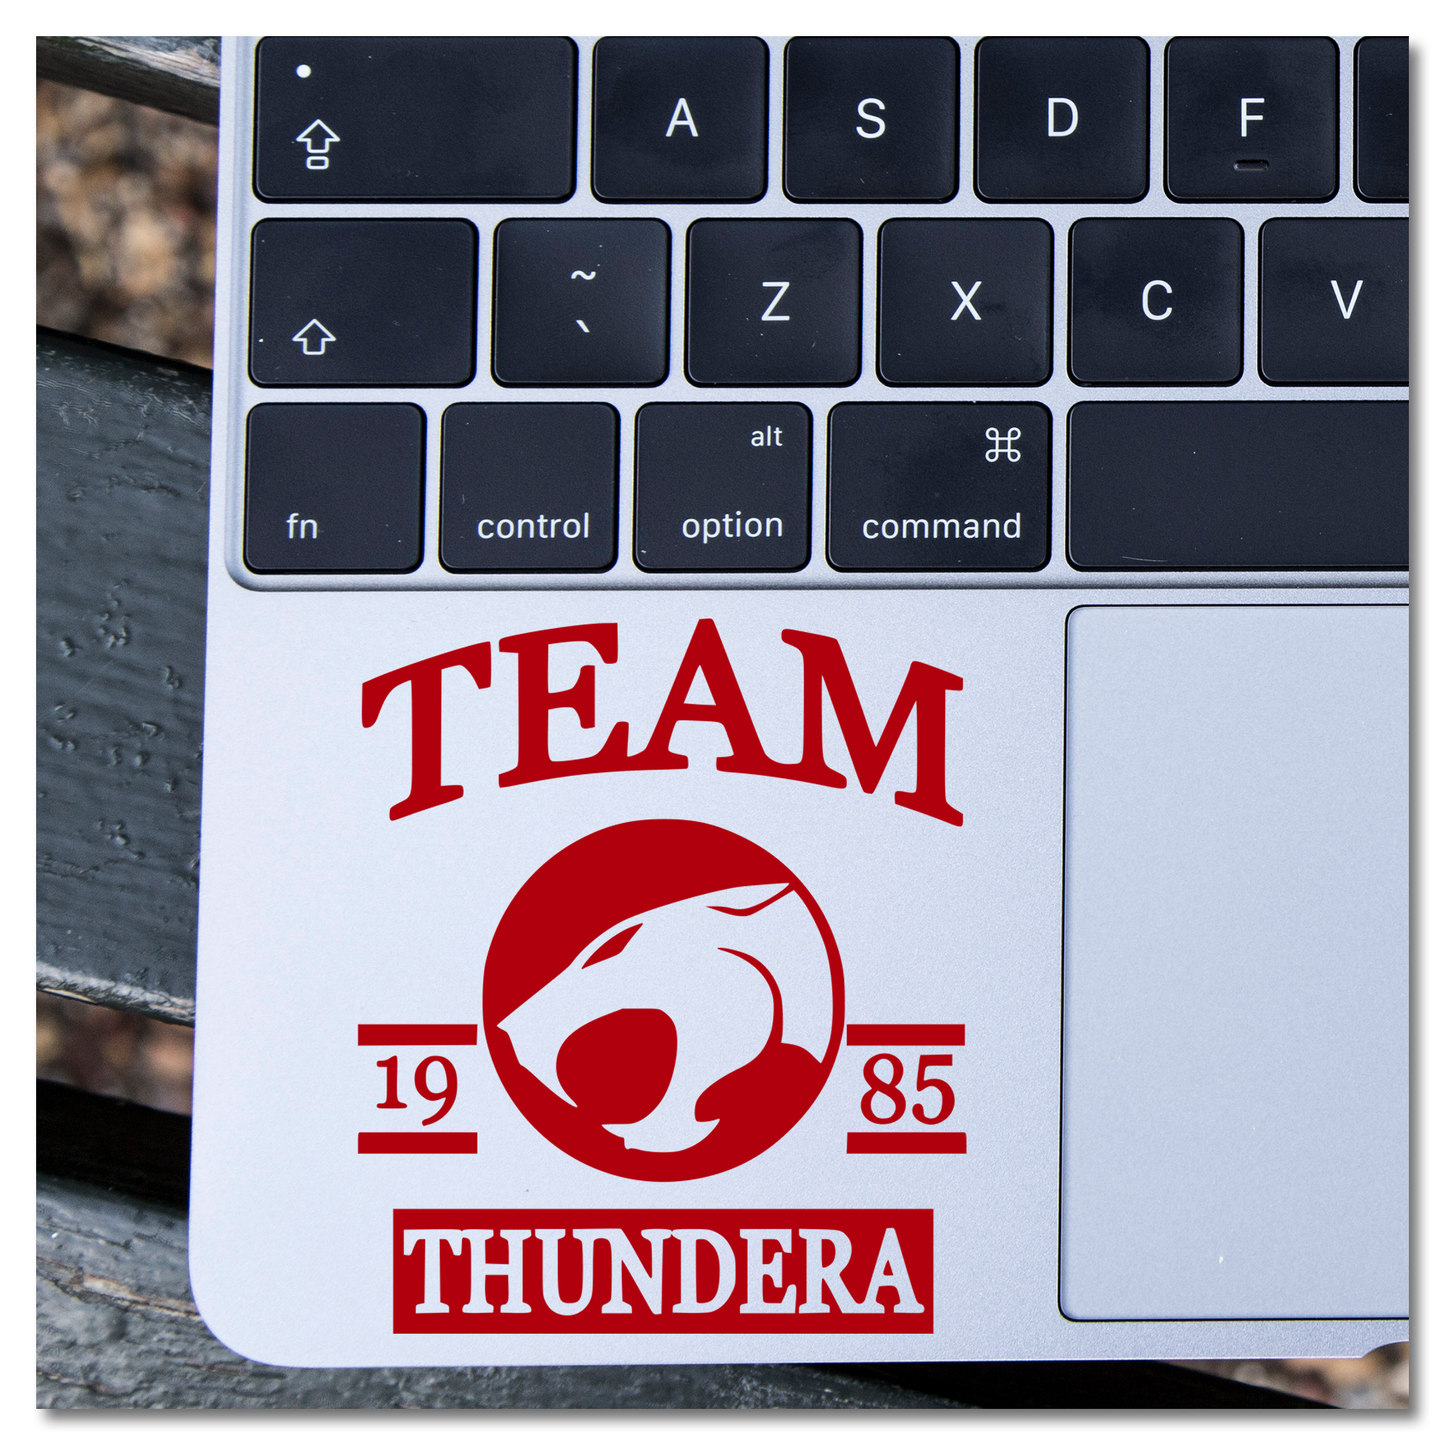 Thundercats Team Thundara Vinyl Decal Sticker